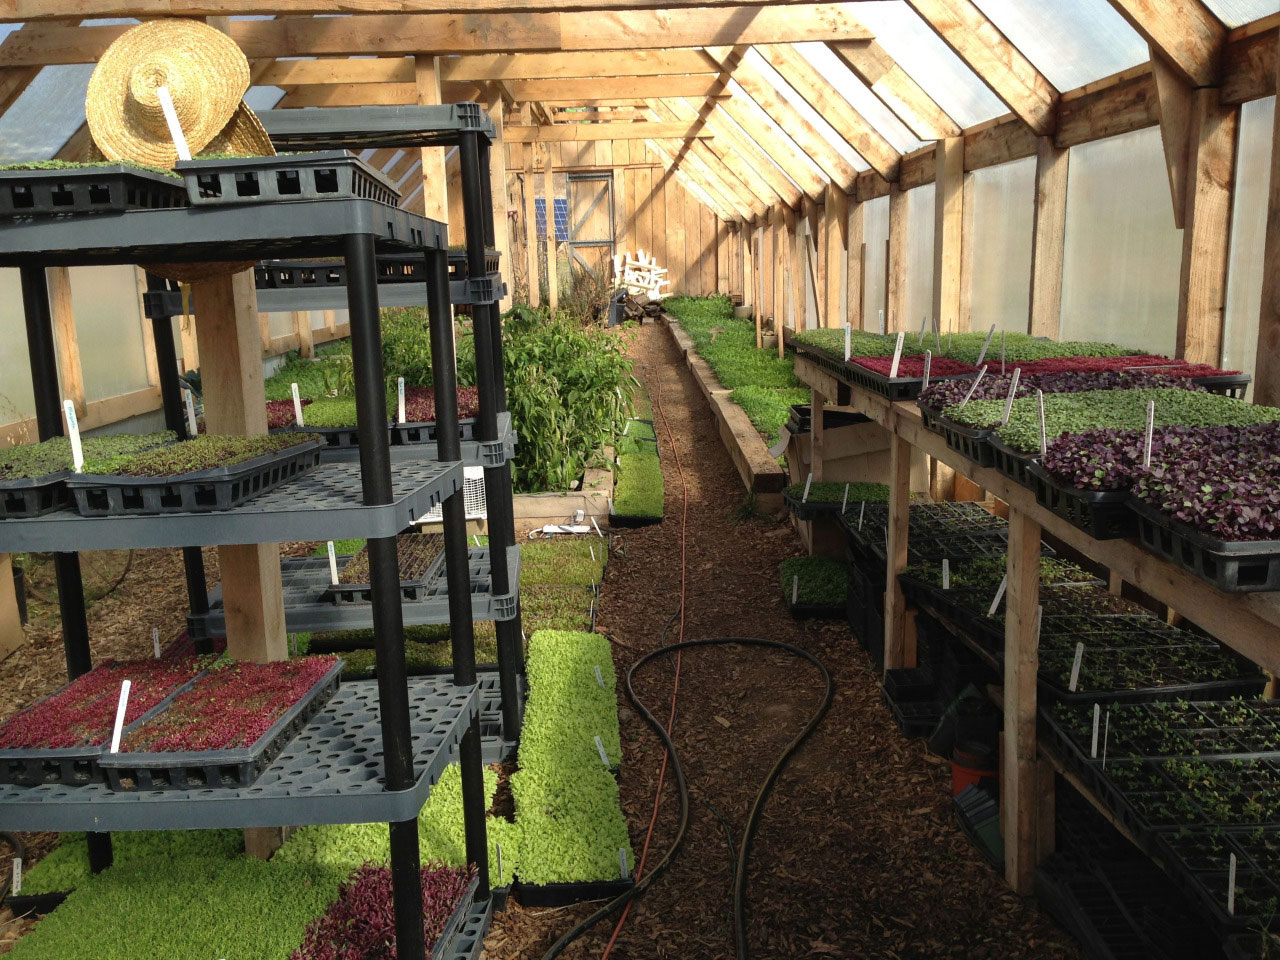 microgreens growing in the heated greenhouse